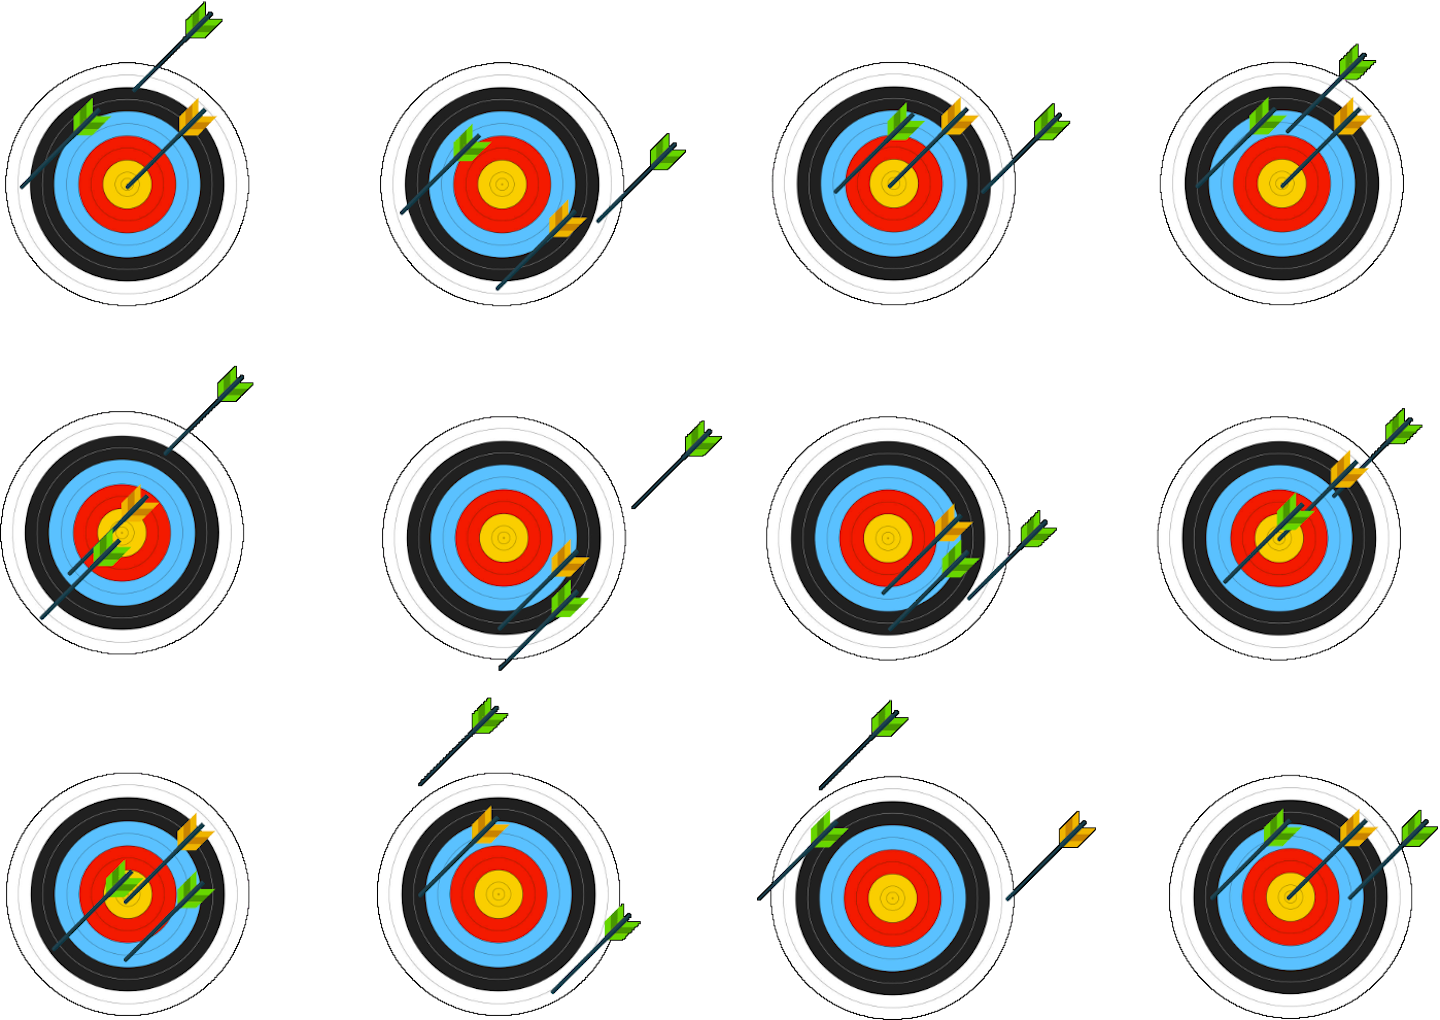 Twelve archery targets